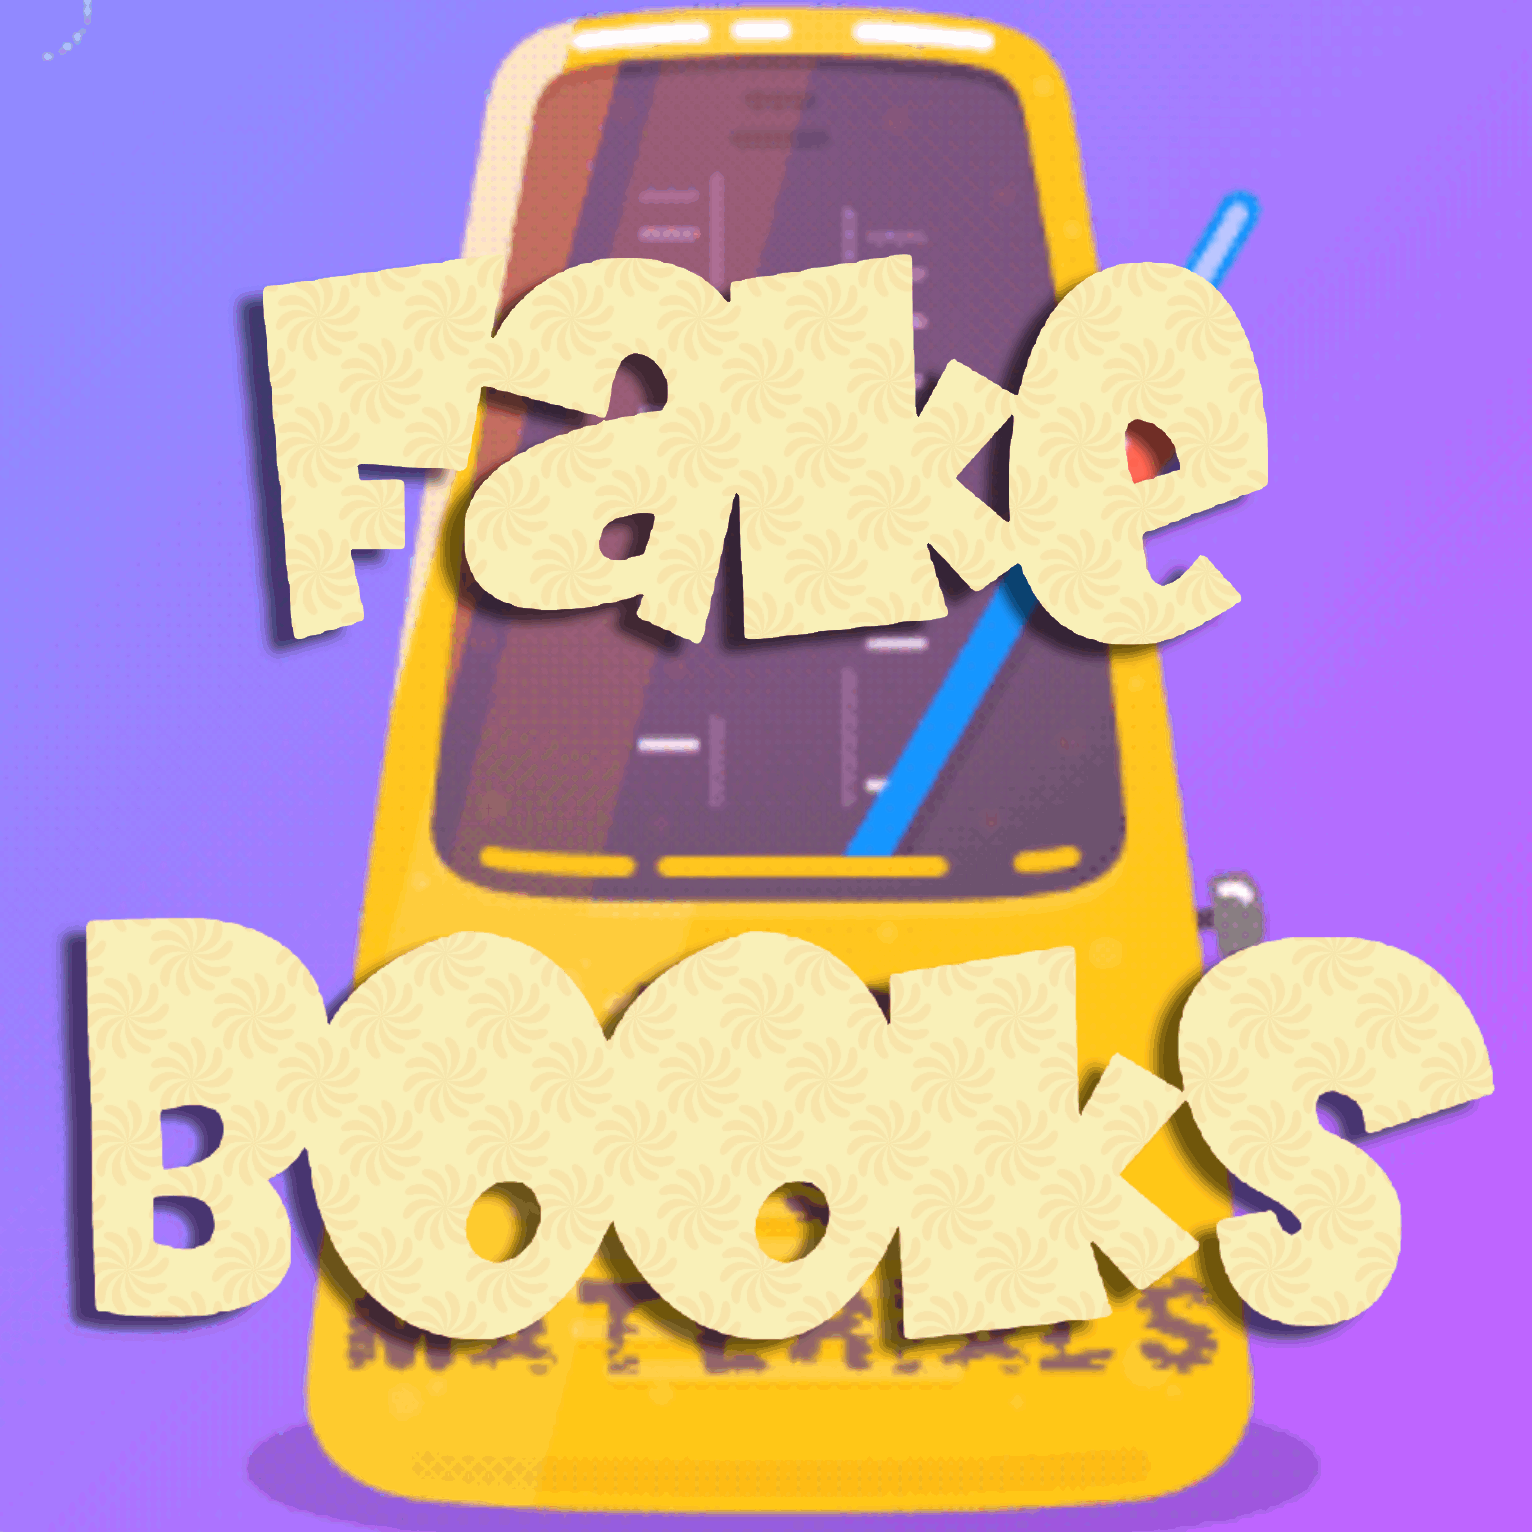 Fake Books Image